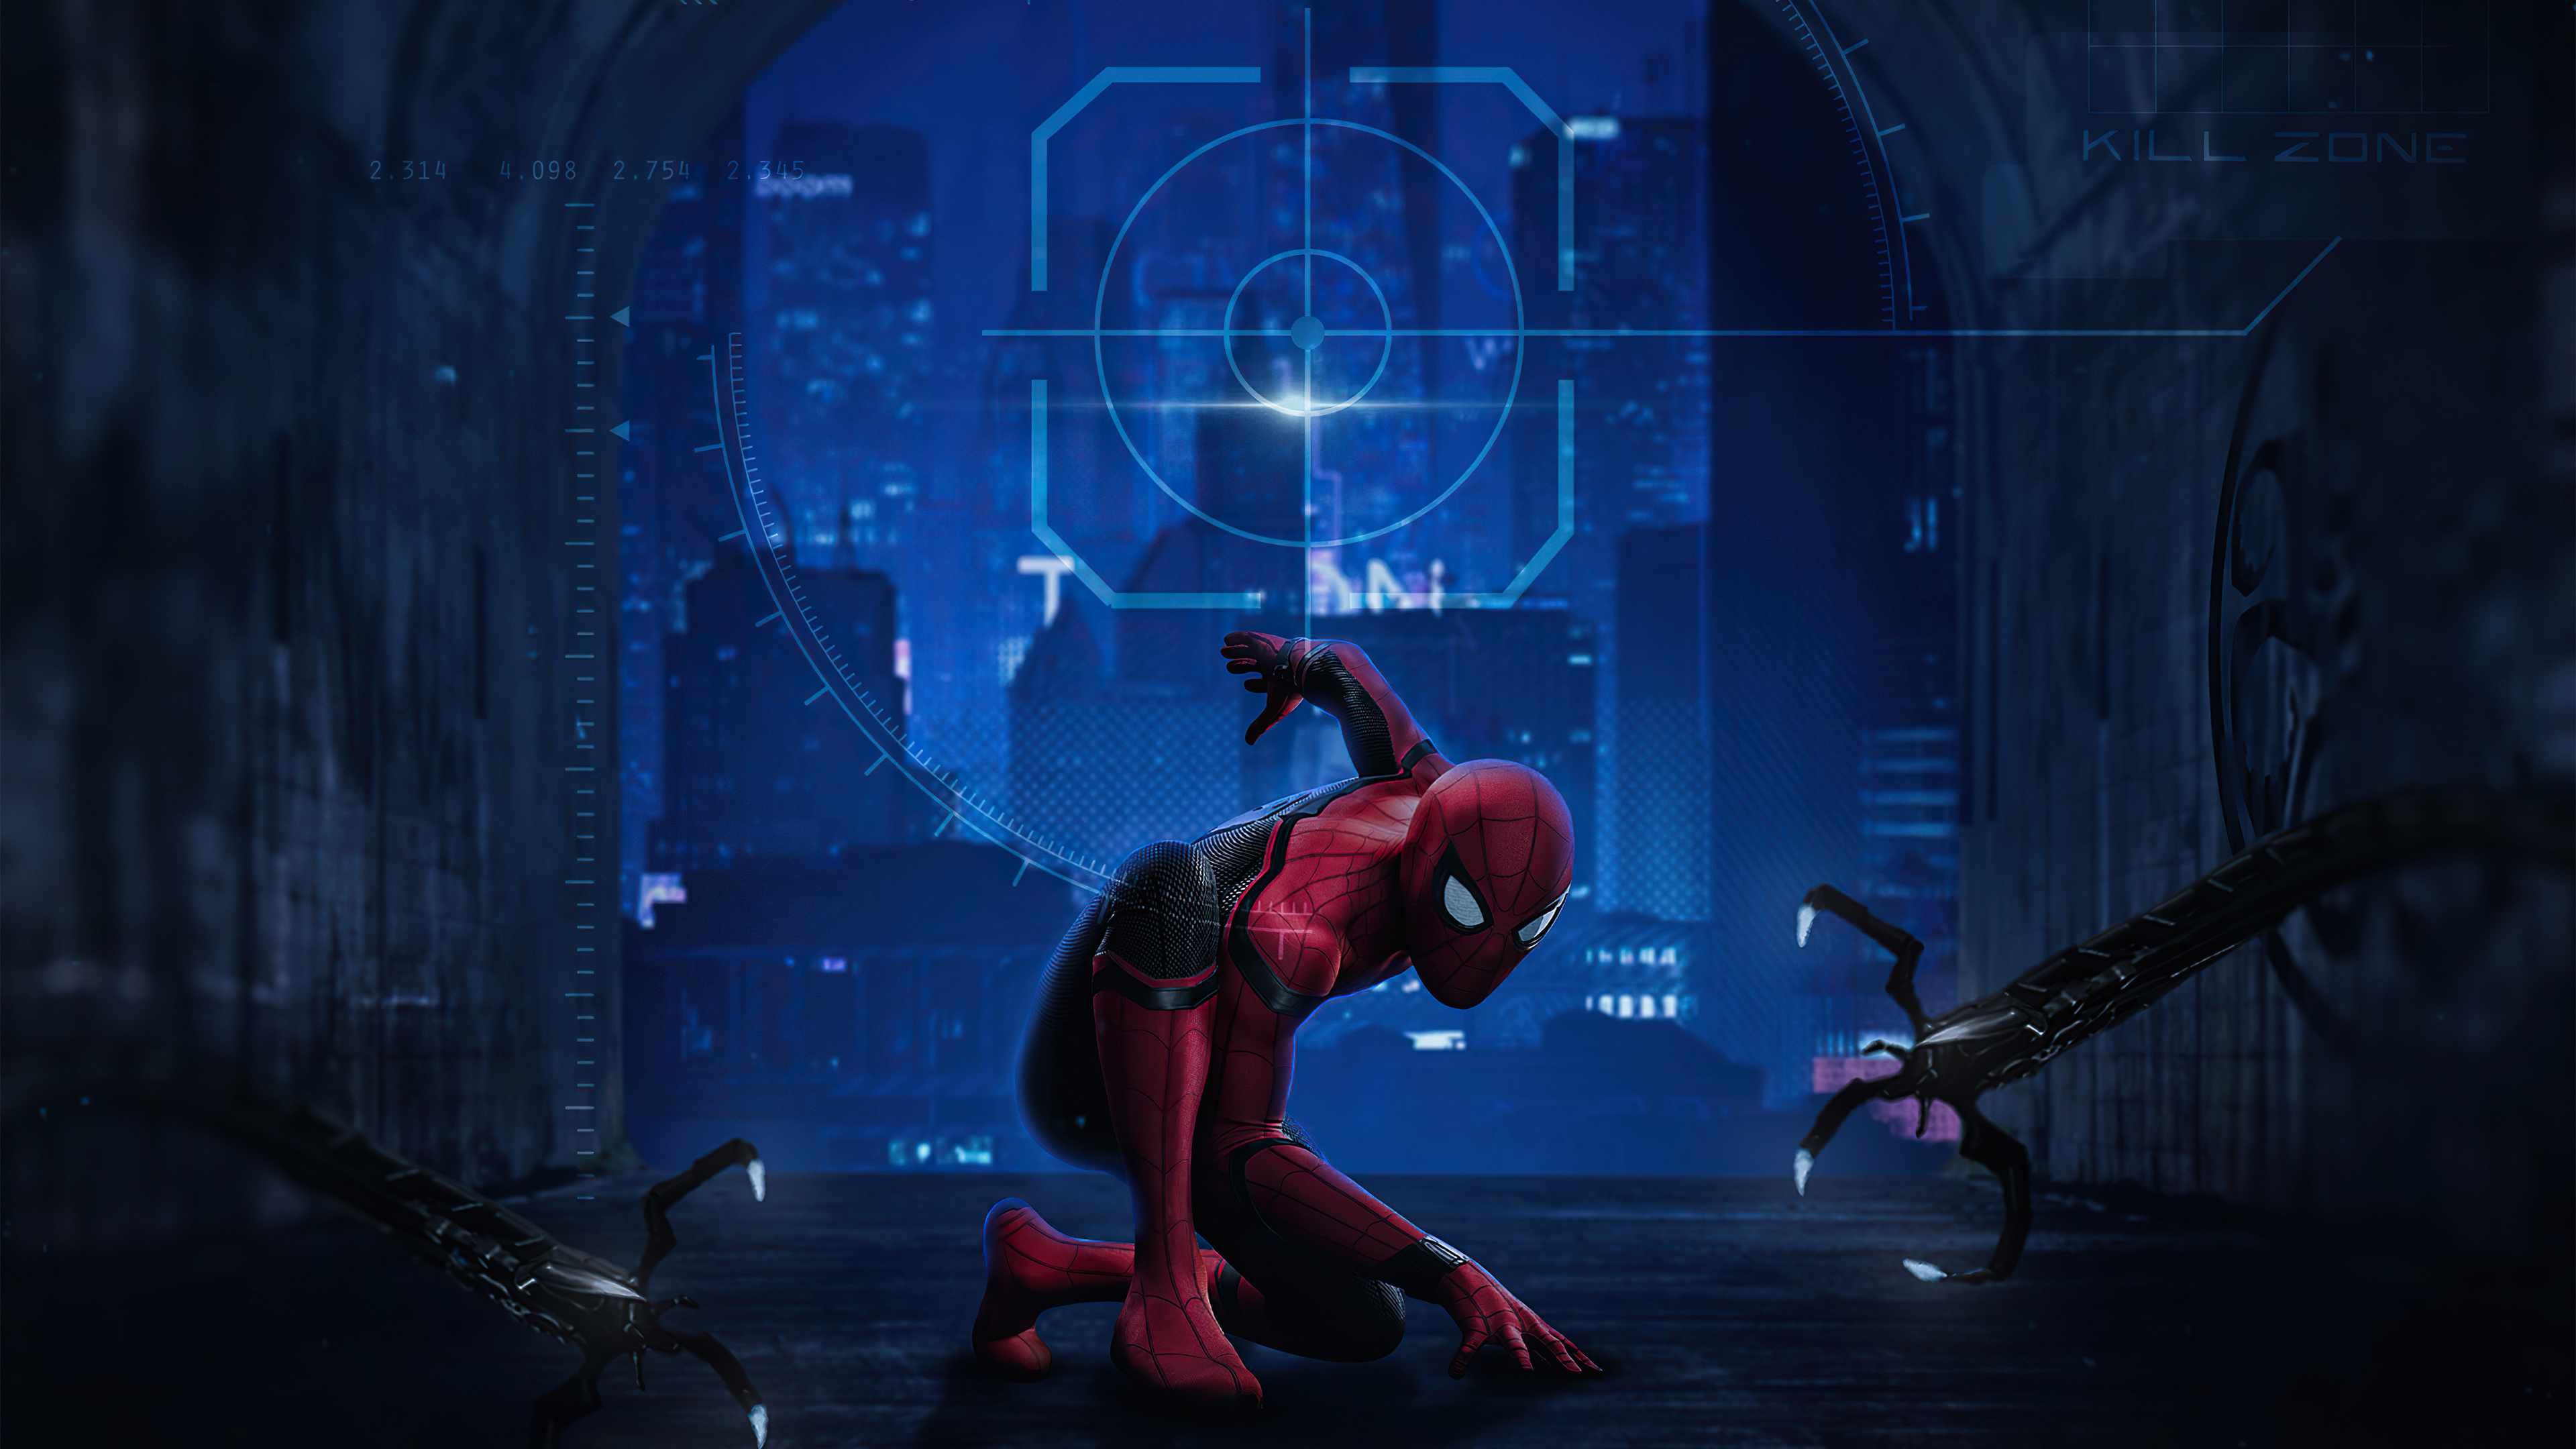 Spider-Man HD Wallpapers | 4K Backgrounds - Wallpapers Den